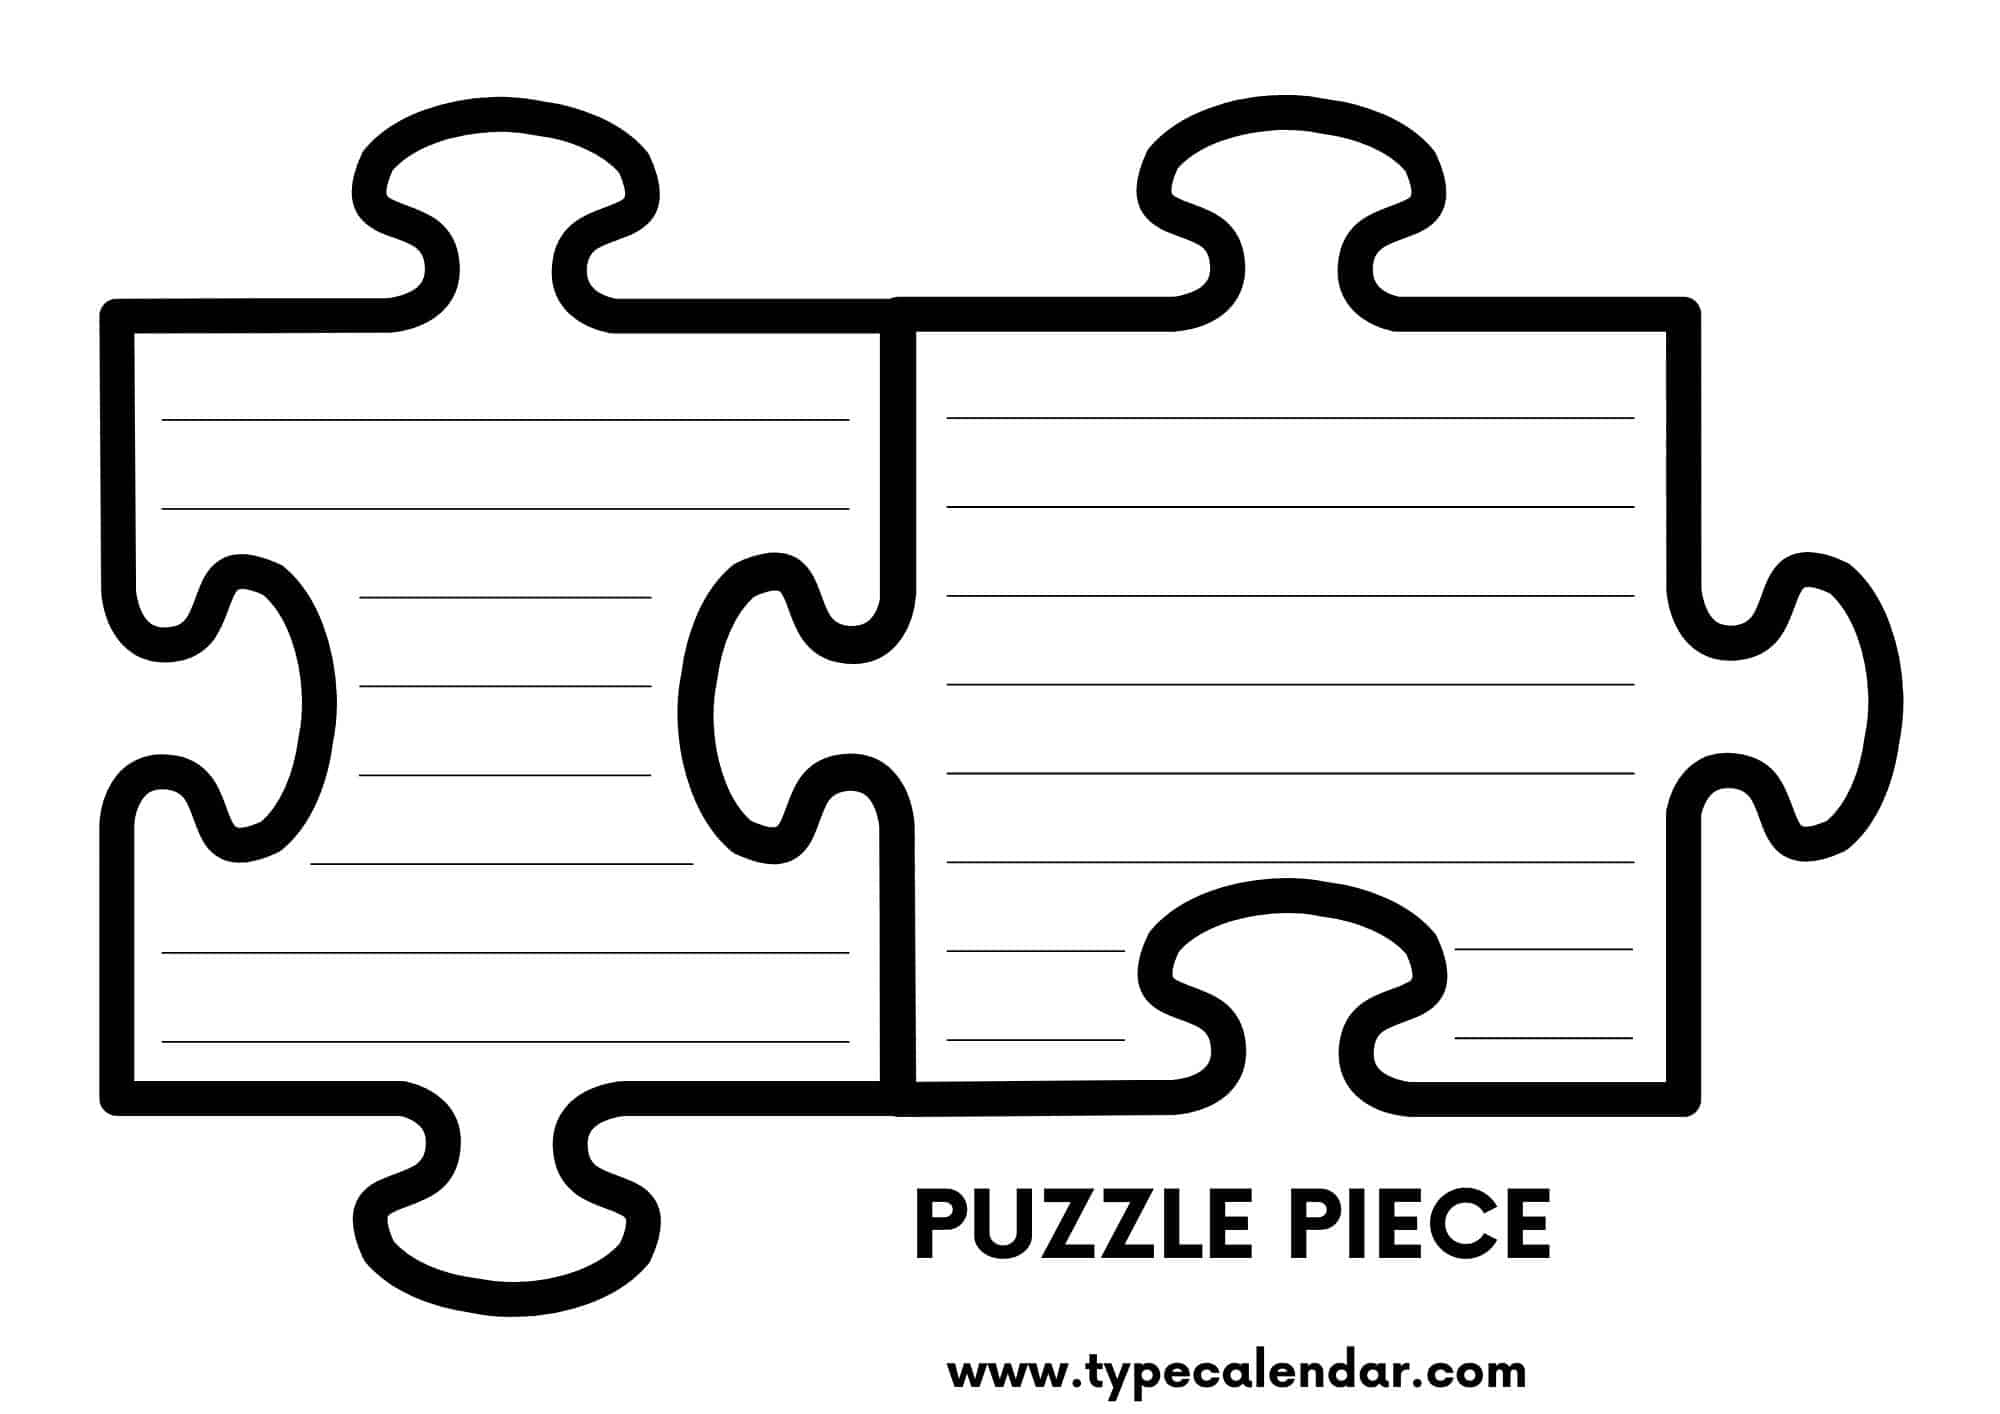 Free Printable Puzzle Piece Templates PDF 4 12 24 Piece - Free Blank Printable Puzzle Pieces